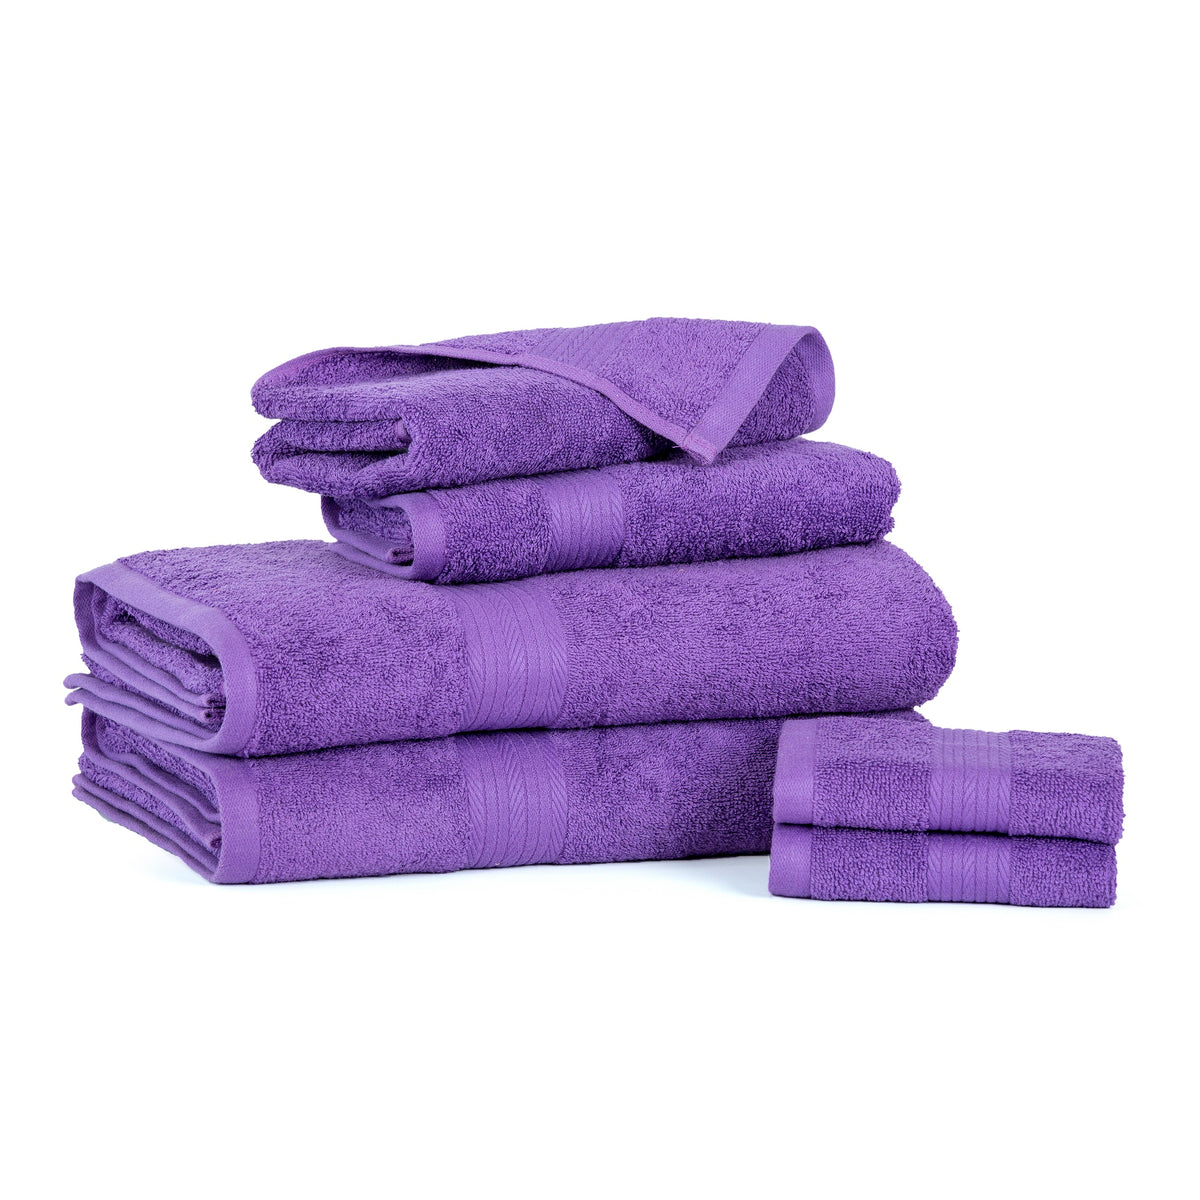 Towel Set - Pack of 6